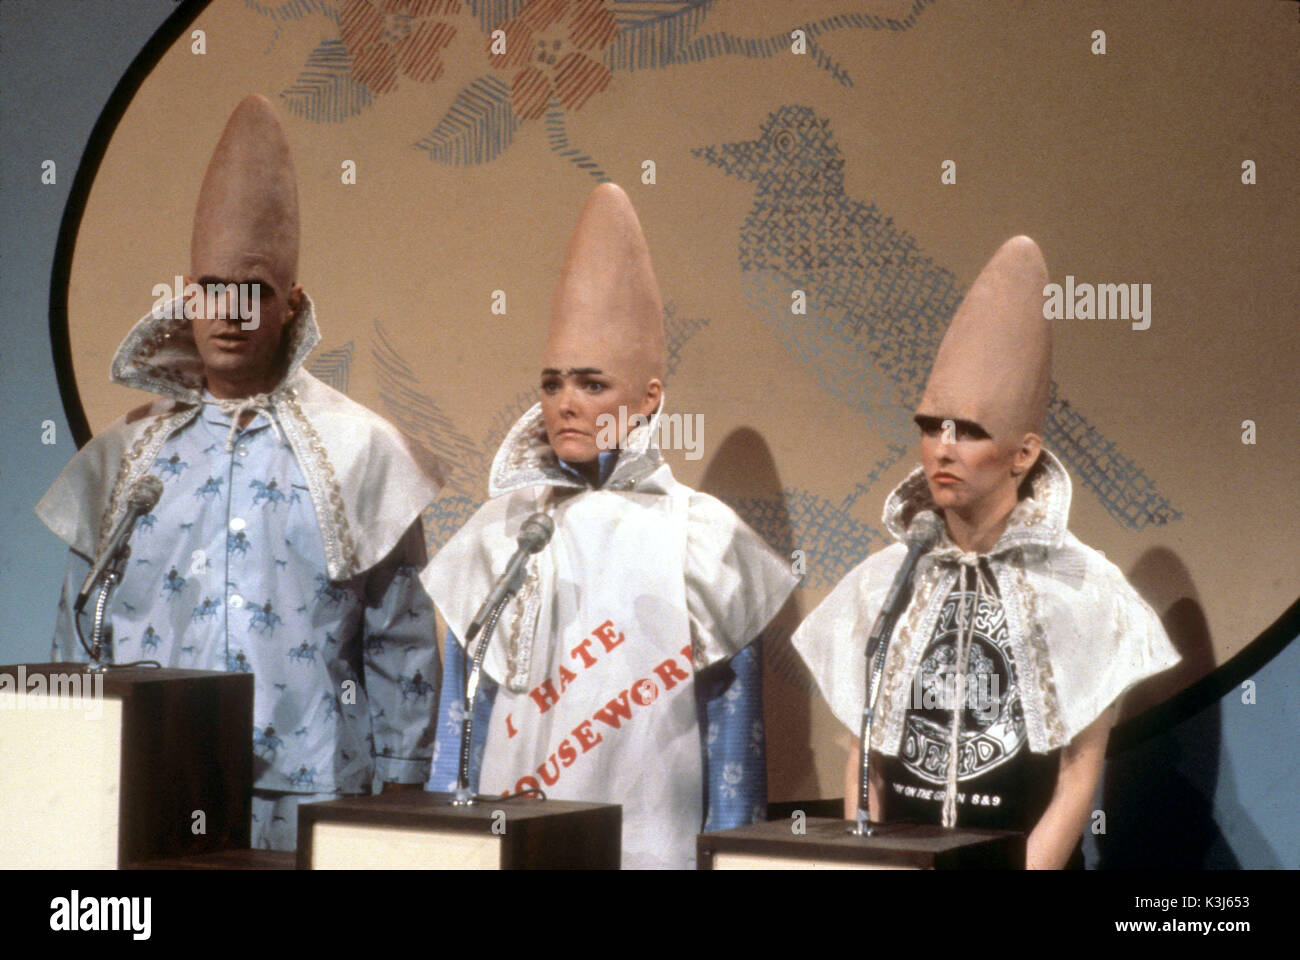 SATURDAY NIGHT LIVE [US TV 1975 - ]  DAN AYKROYD, JANE CURTIN, LORAINE NEWMAN  'Coneheads' Stock Photo